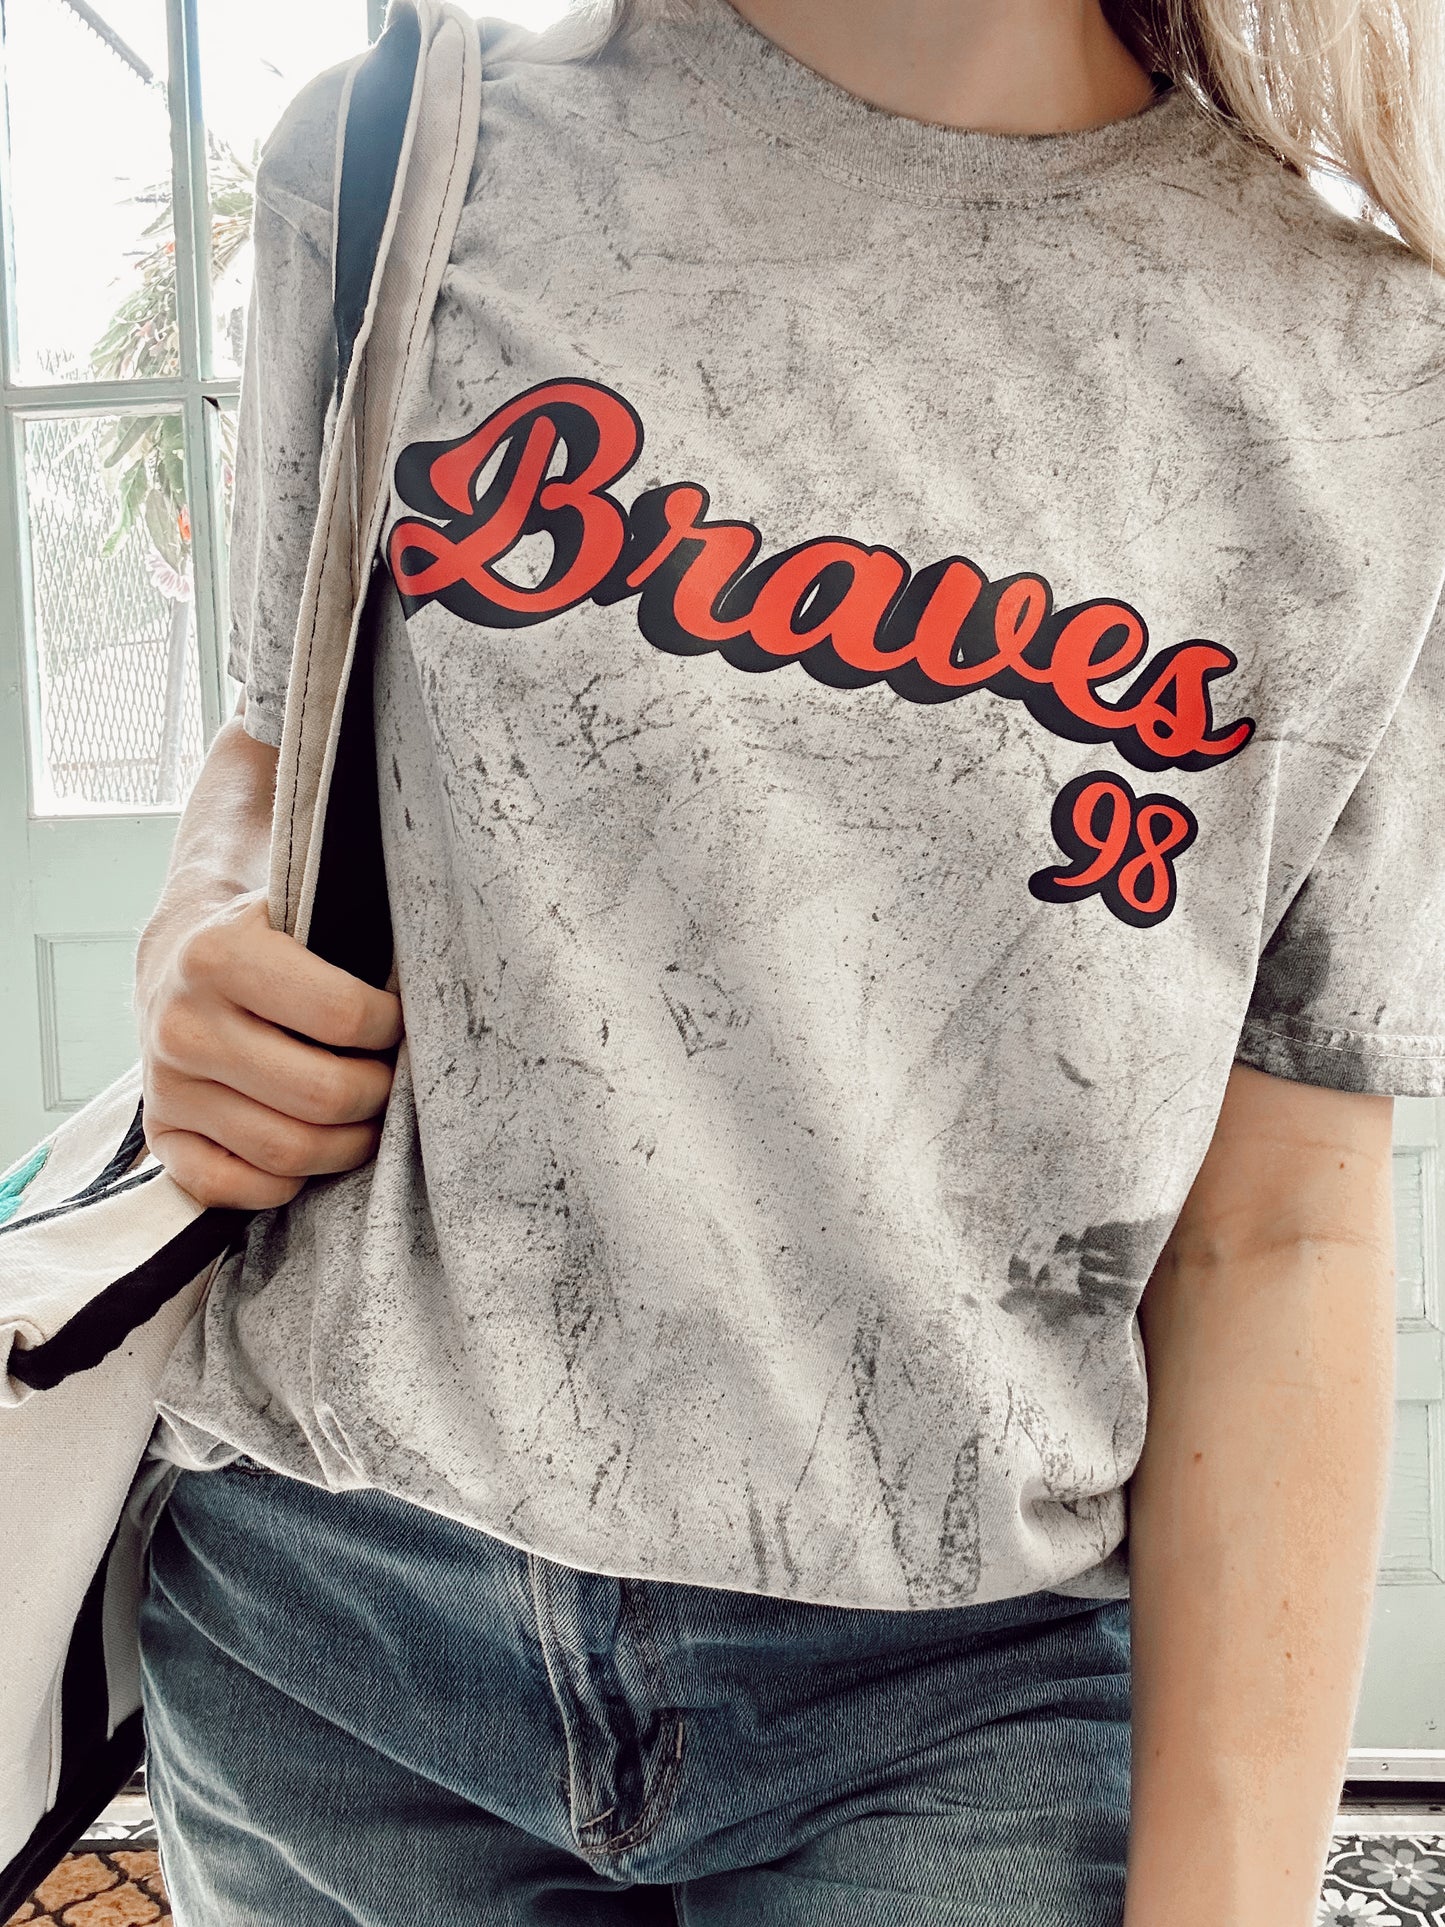 Braves 98 - (Adult) Comfort Colors TShirts